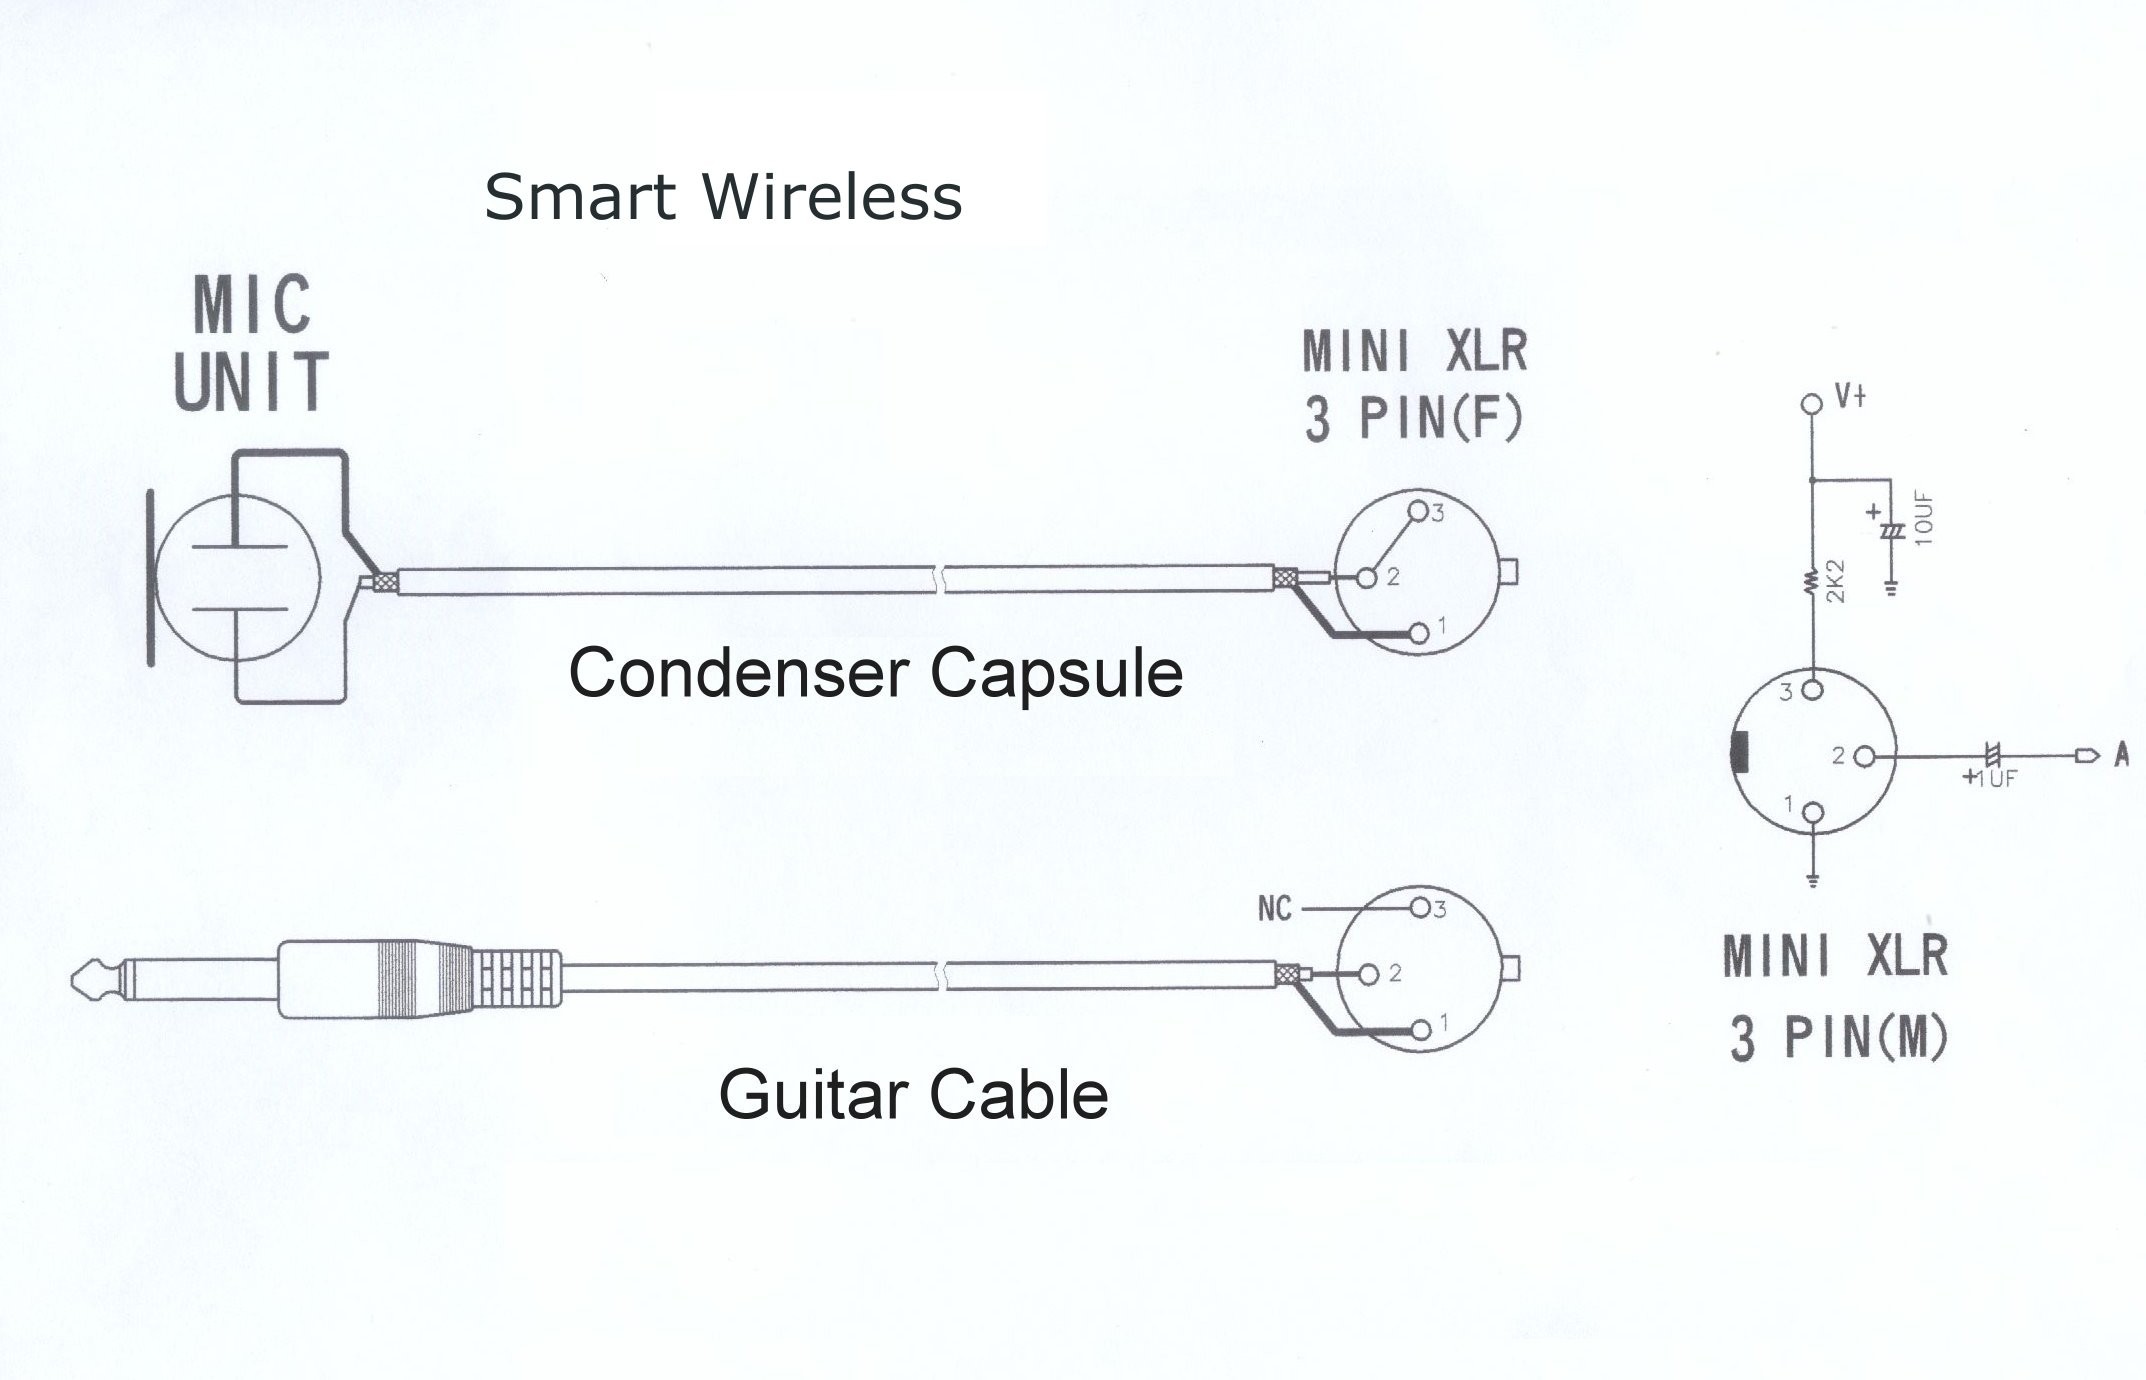 Xlr to Mono Jack Wiring Diagram Luxury Wiring Xlr Connectors Diagram Fresh Xlr to Rca Cable Related Post